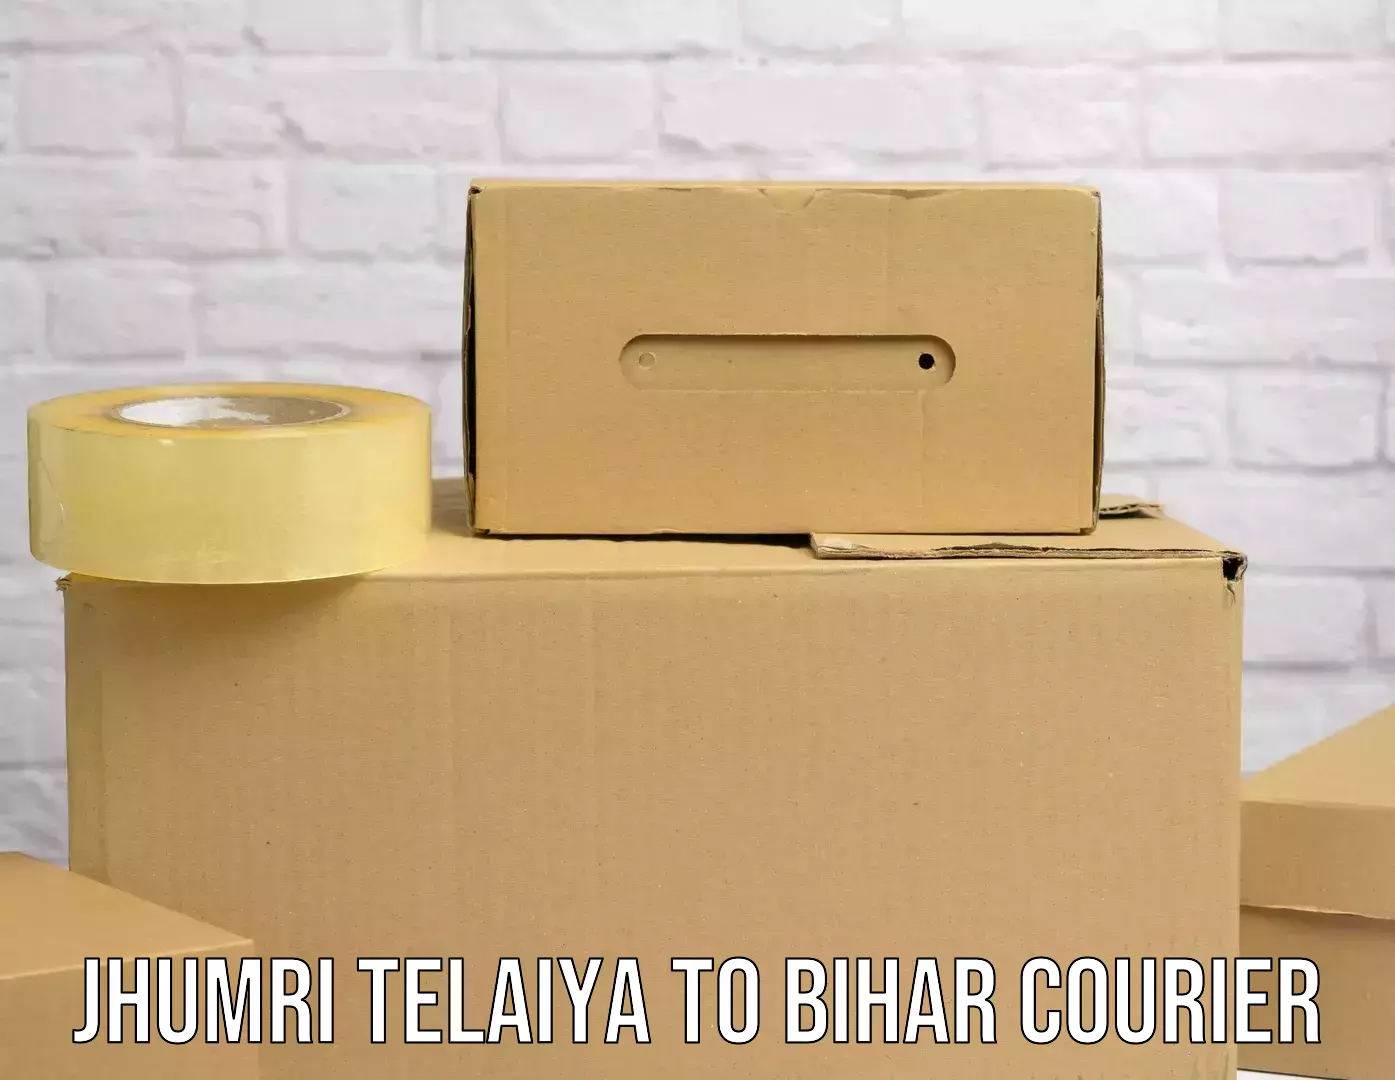 Courier service comparison Jhumri Telaiya to Sasaram